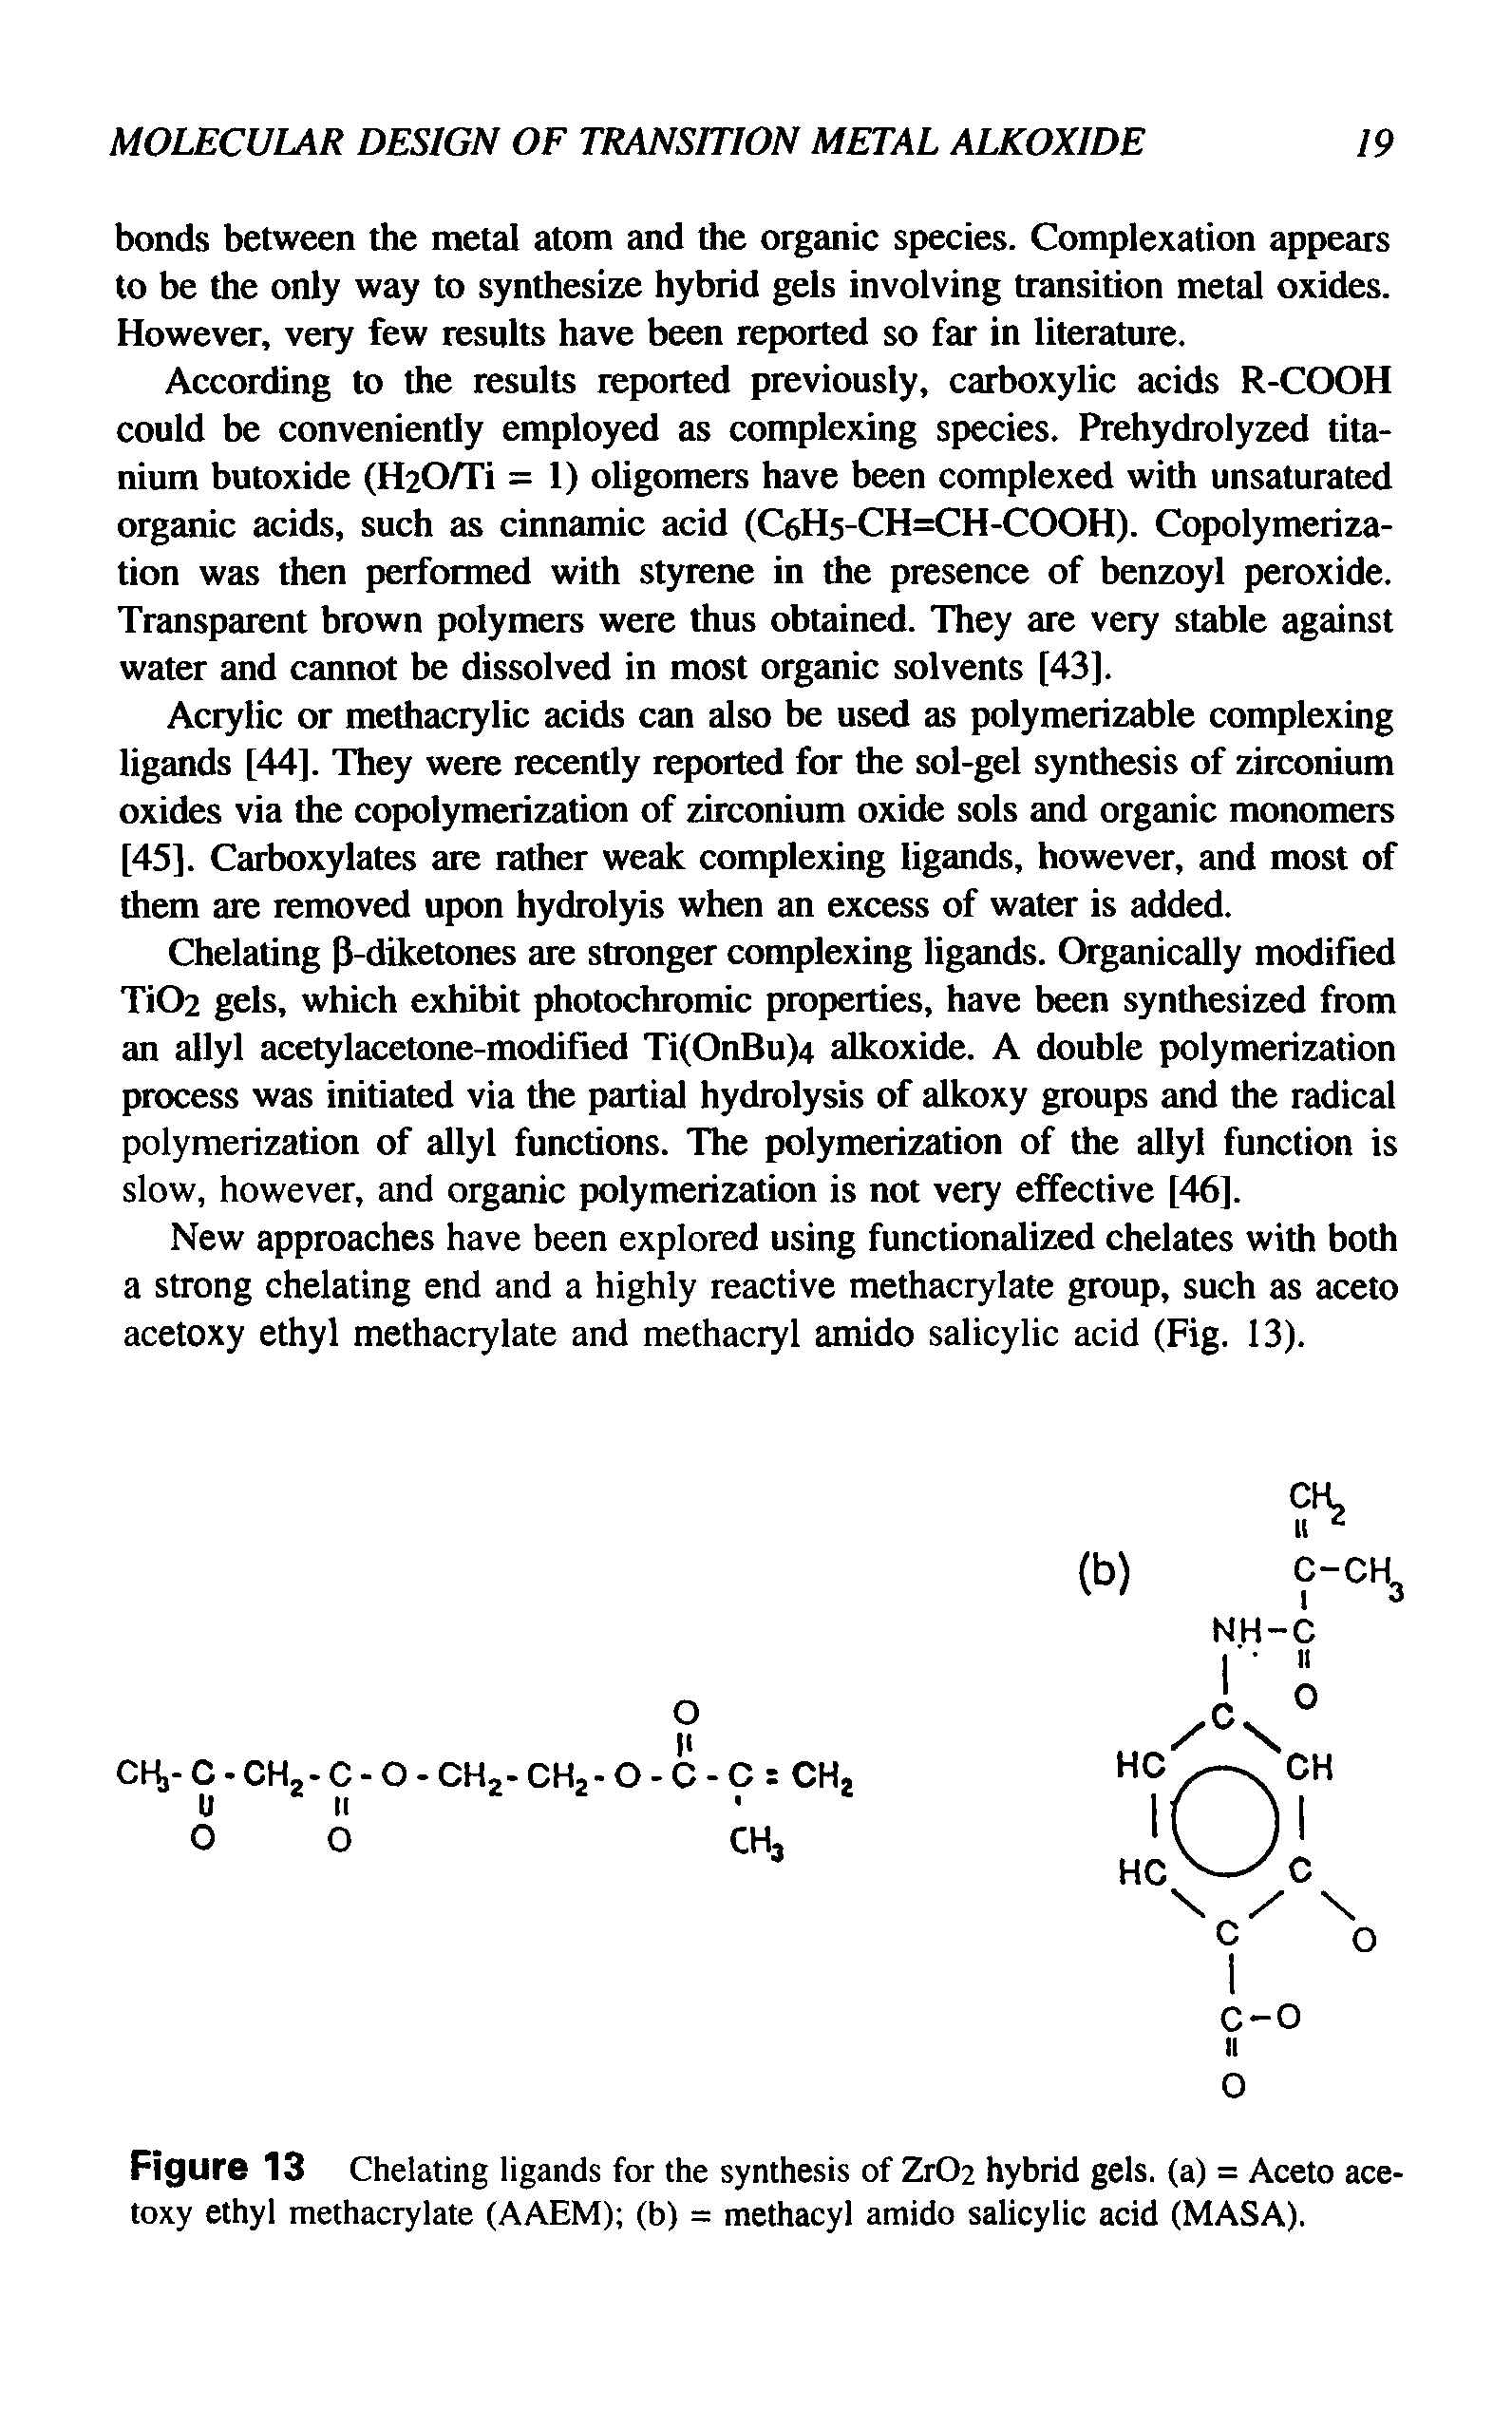 Figure 13 Chelating ligands for the synthesis of Zr02 hybrid gels, (a) = Aceto acetoxy ethyl methacrylate (AAEM) (b) = methacyl amido salicylic acid (MASA).